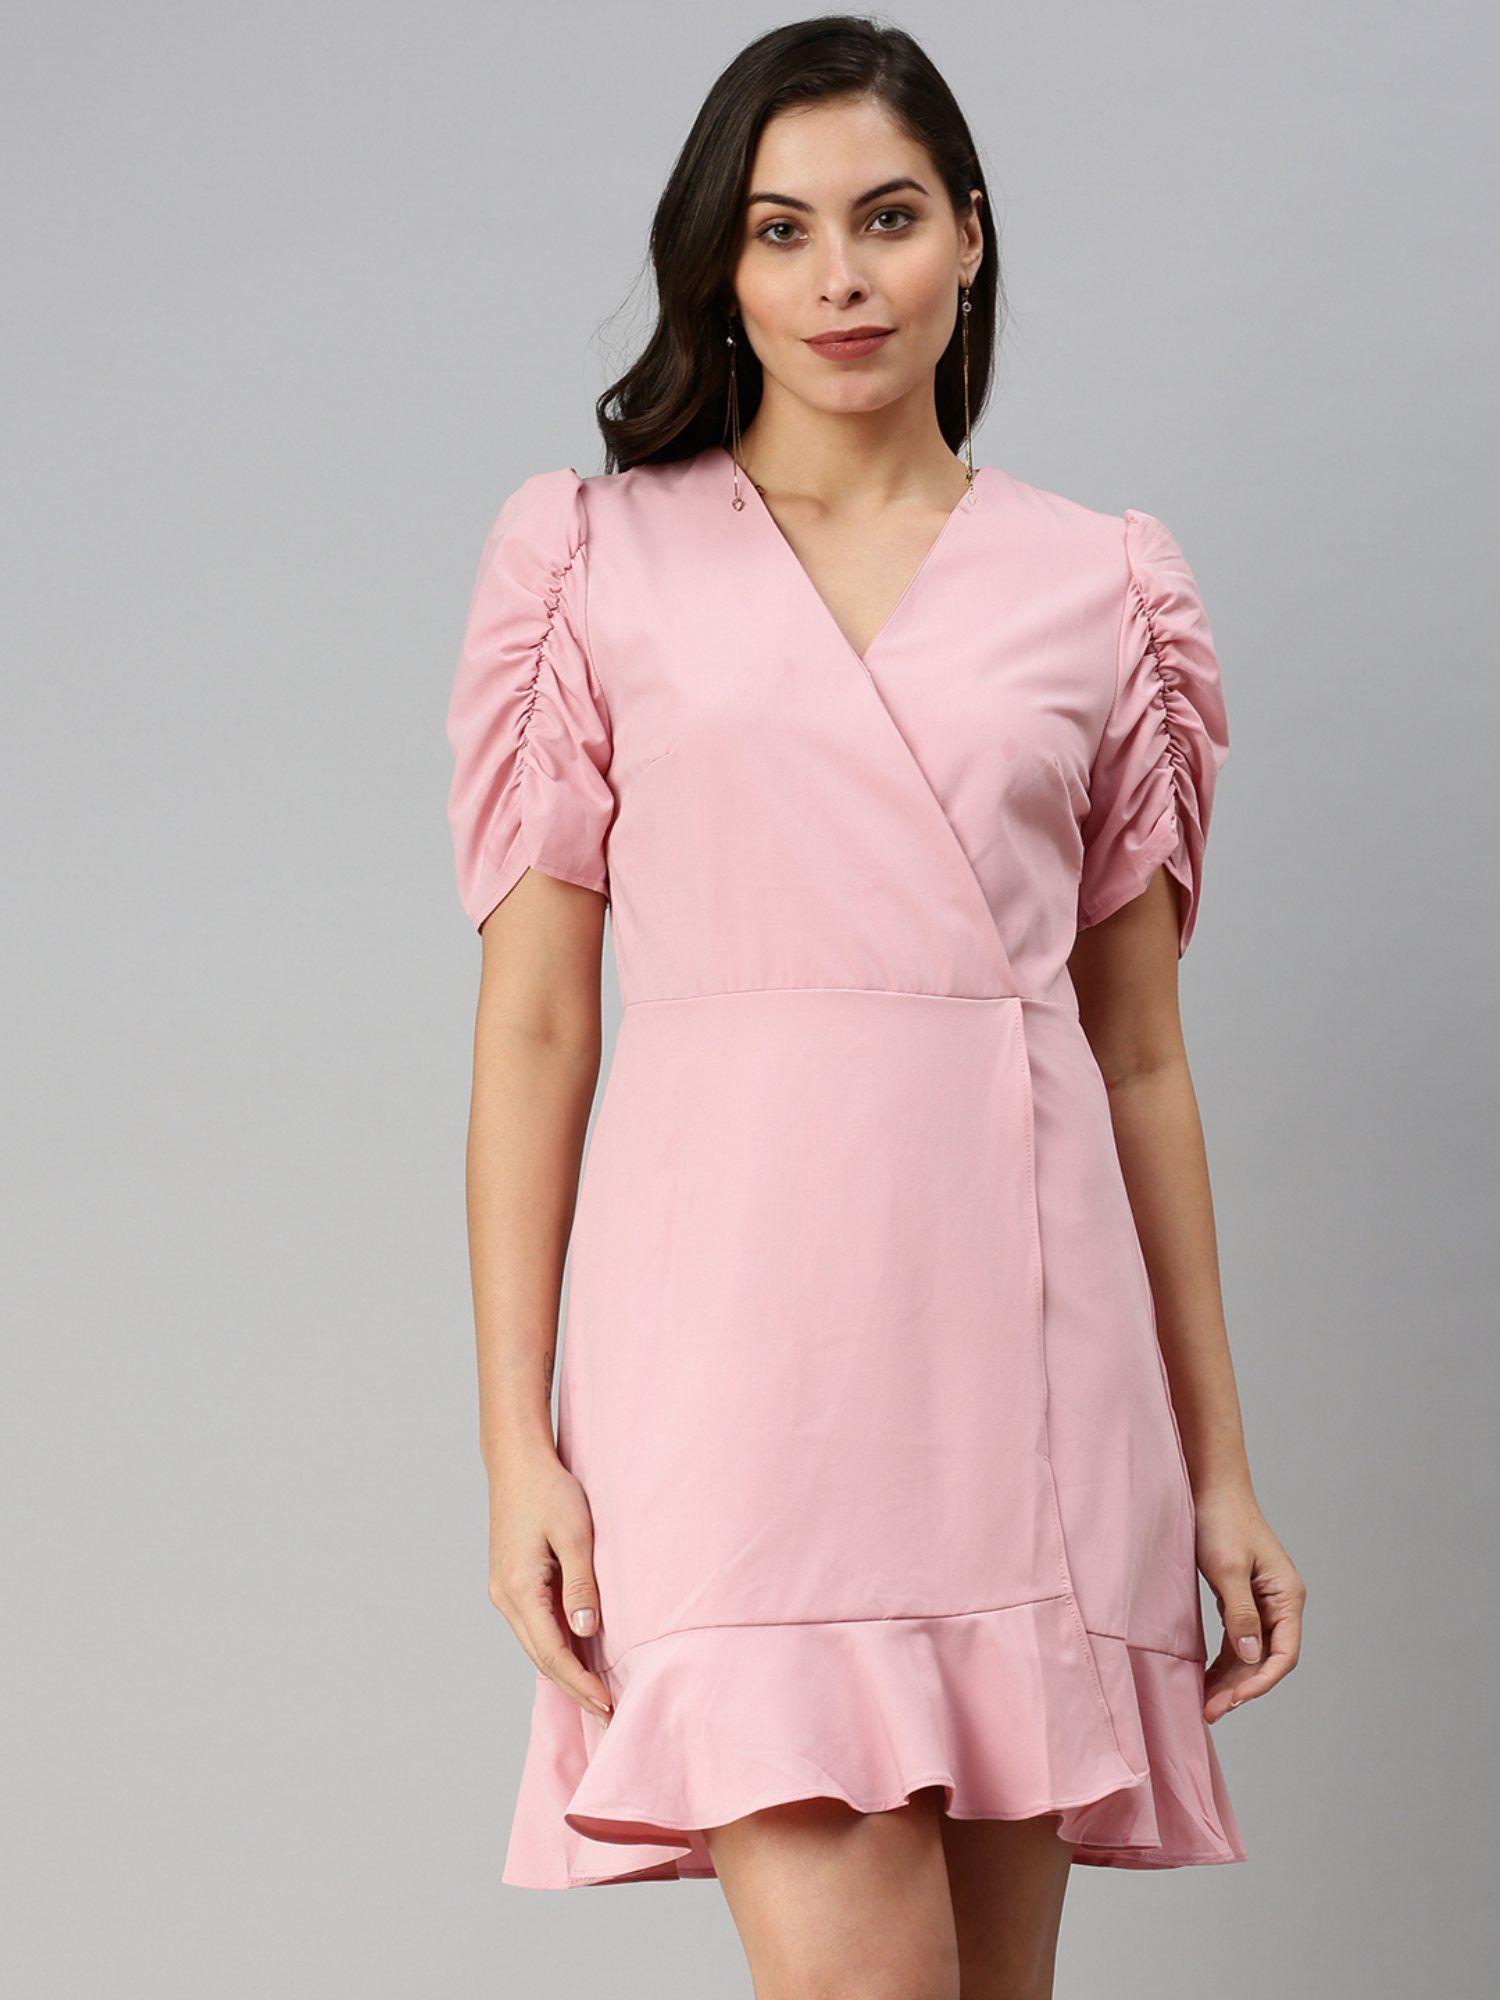 women's solid pink a-line dress